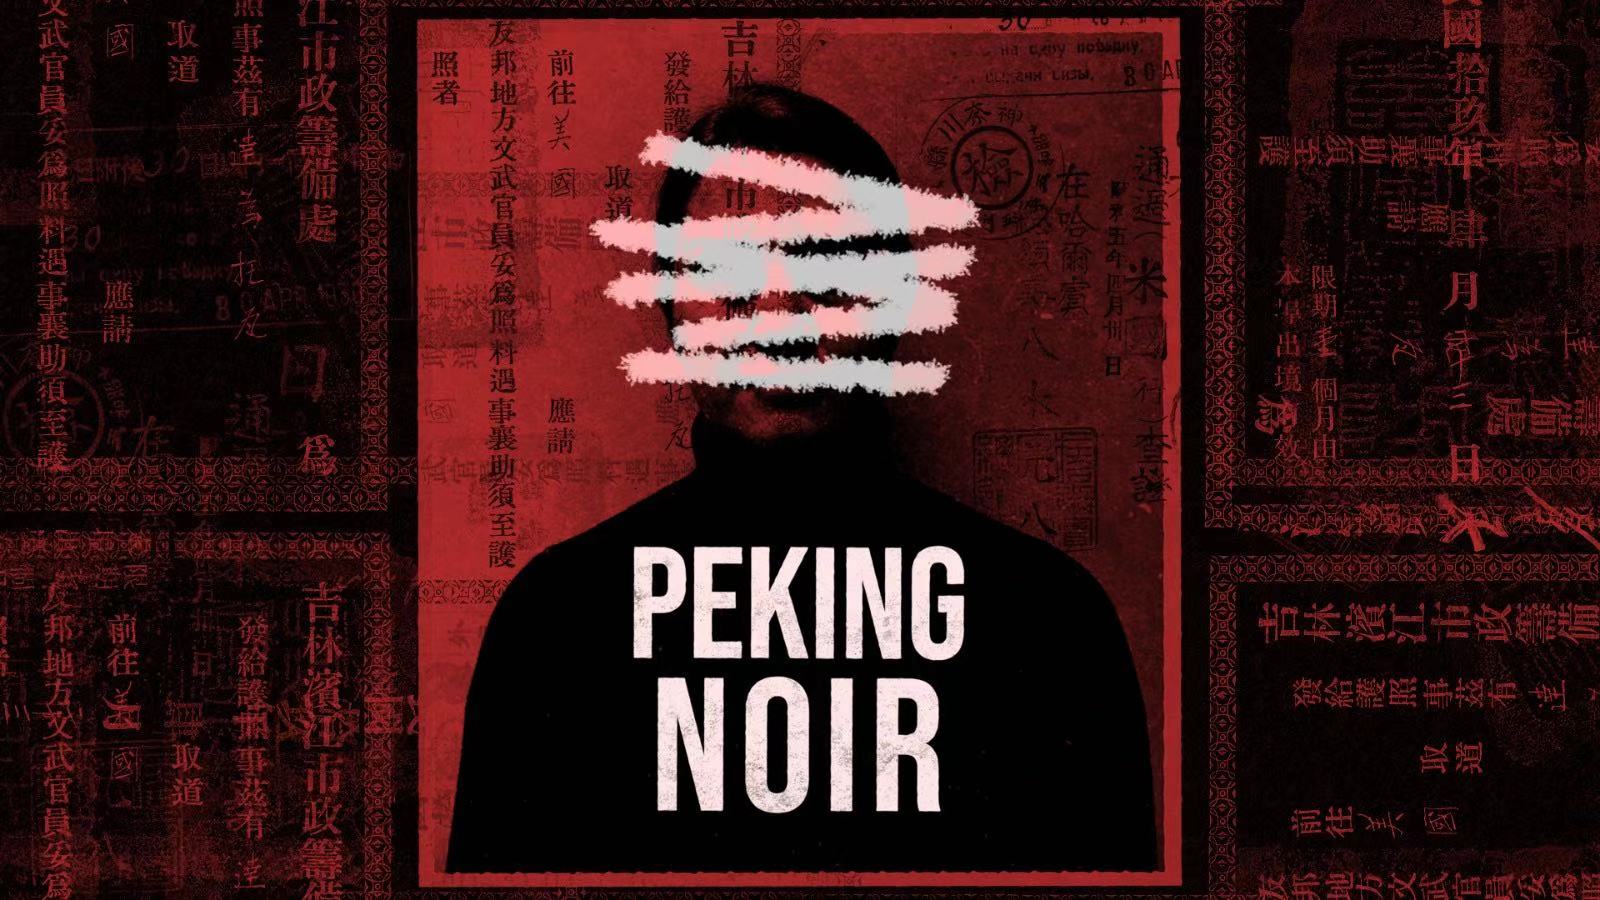 Sex, Drugs & Bank Jobs: New Paul French Drama 'Peking Noir'